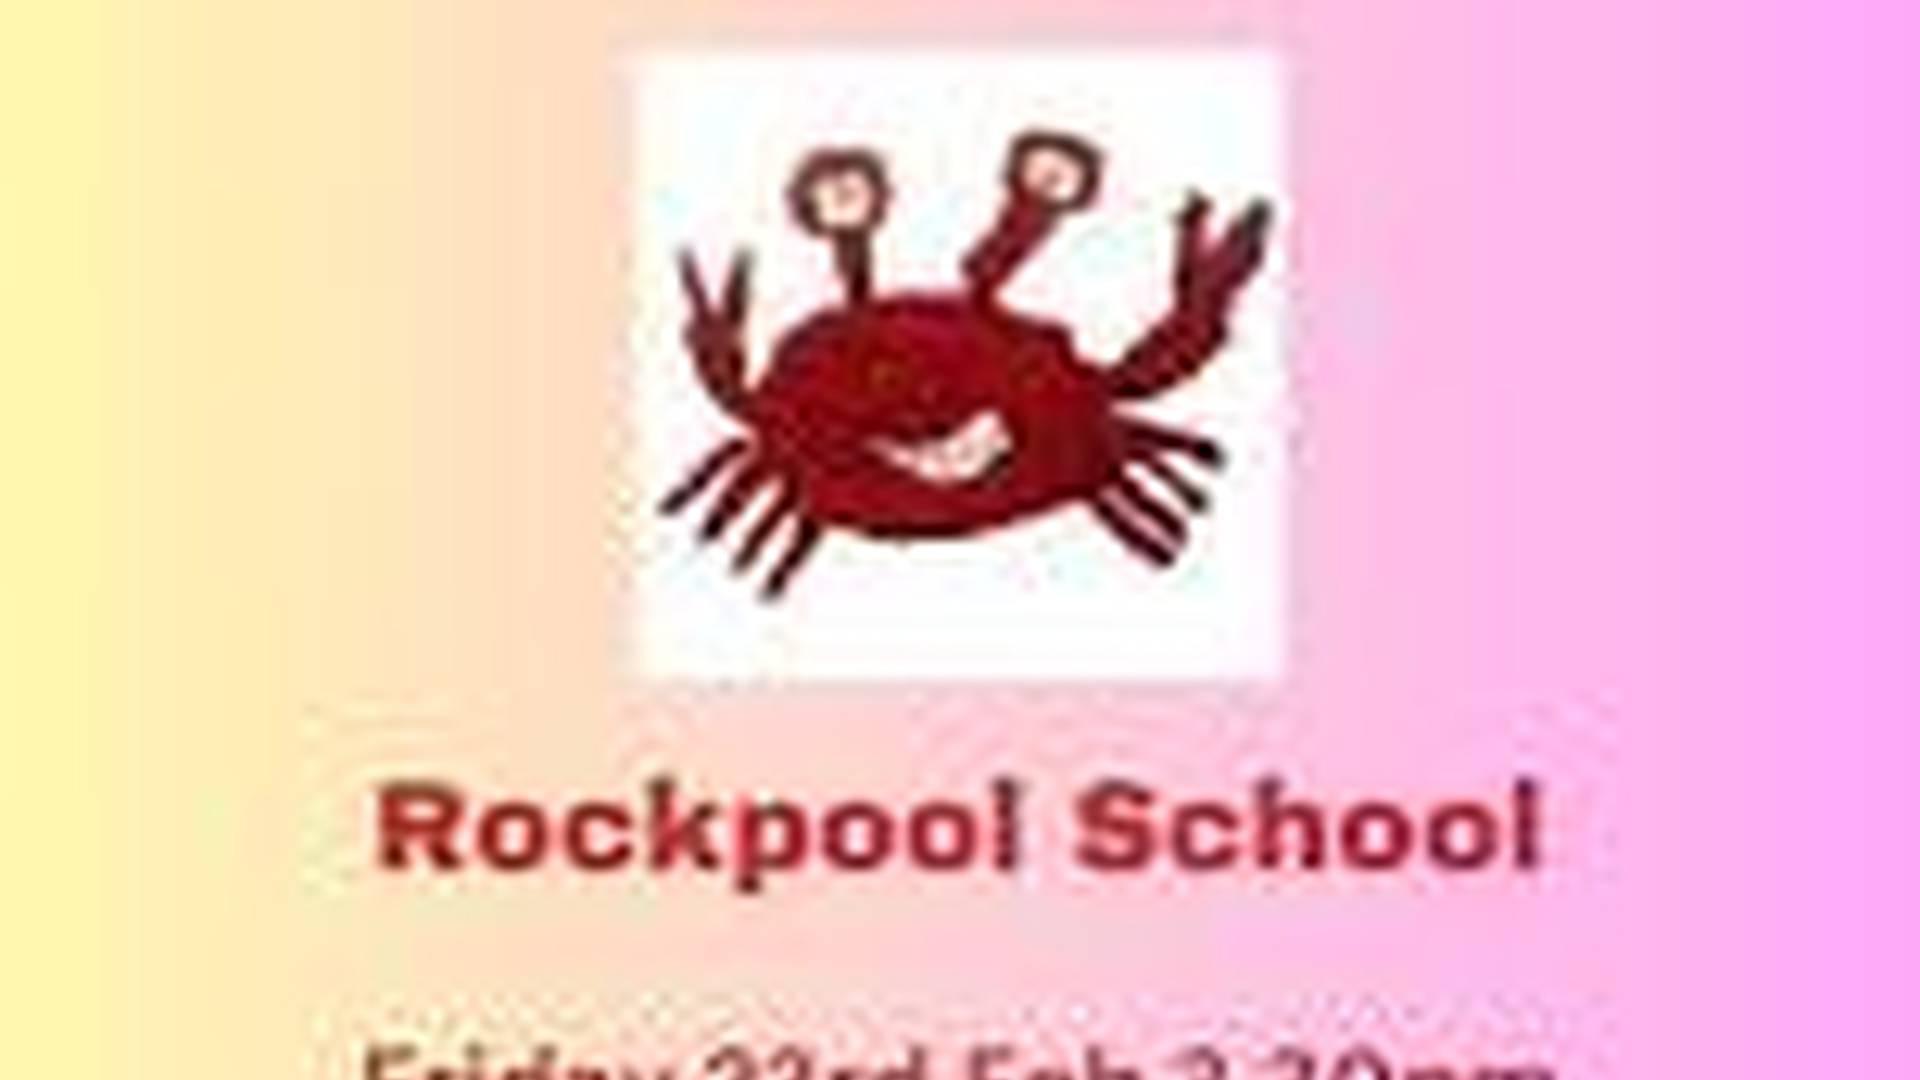 Rockpool school - BOOKING ESSENTIAL photo